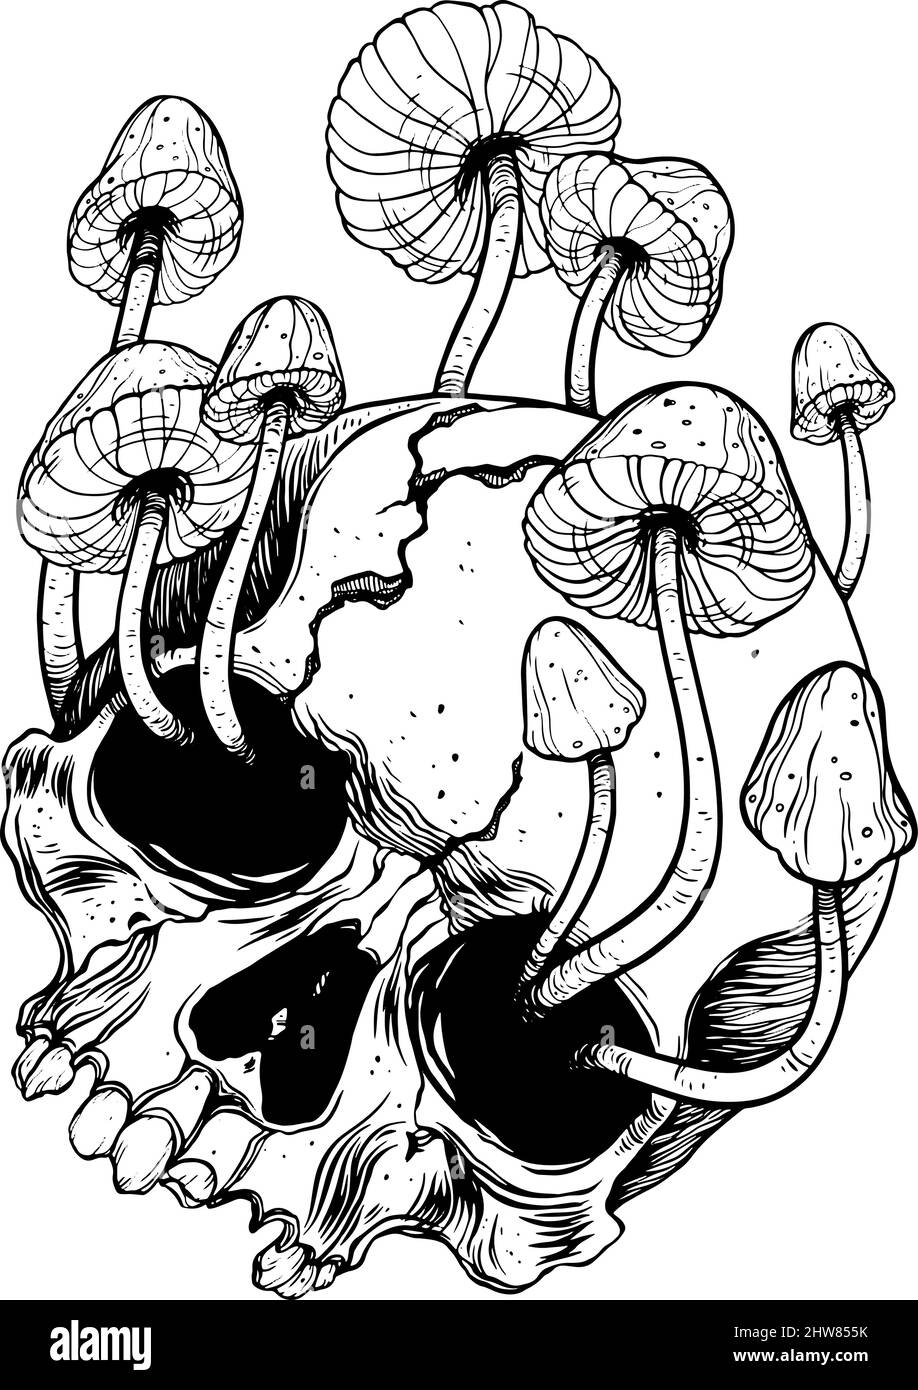 Overgrown skull. Mushrooms. Death - Life graphic illustration Stock Vector